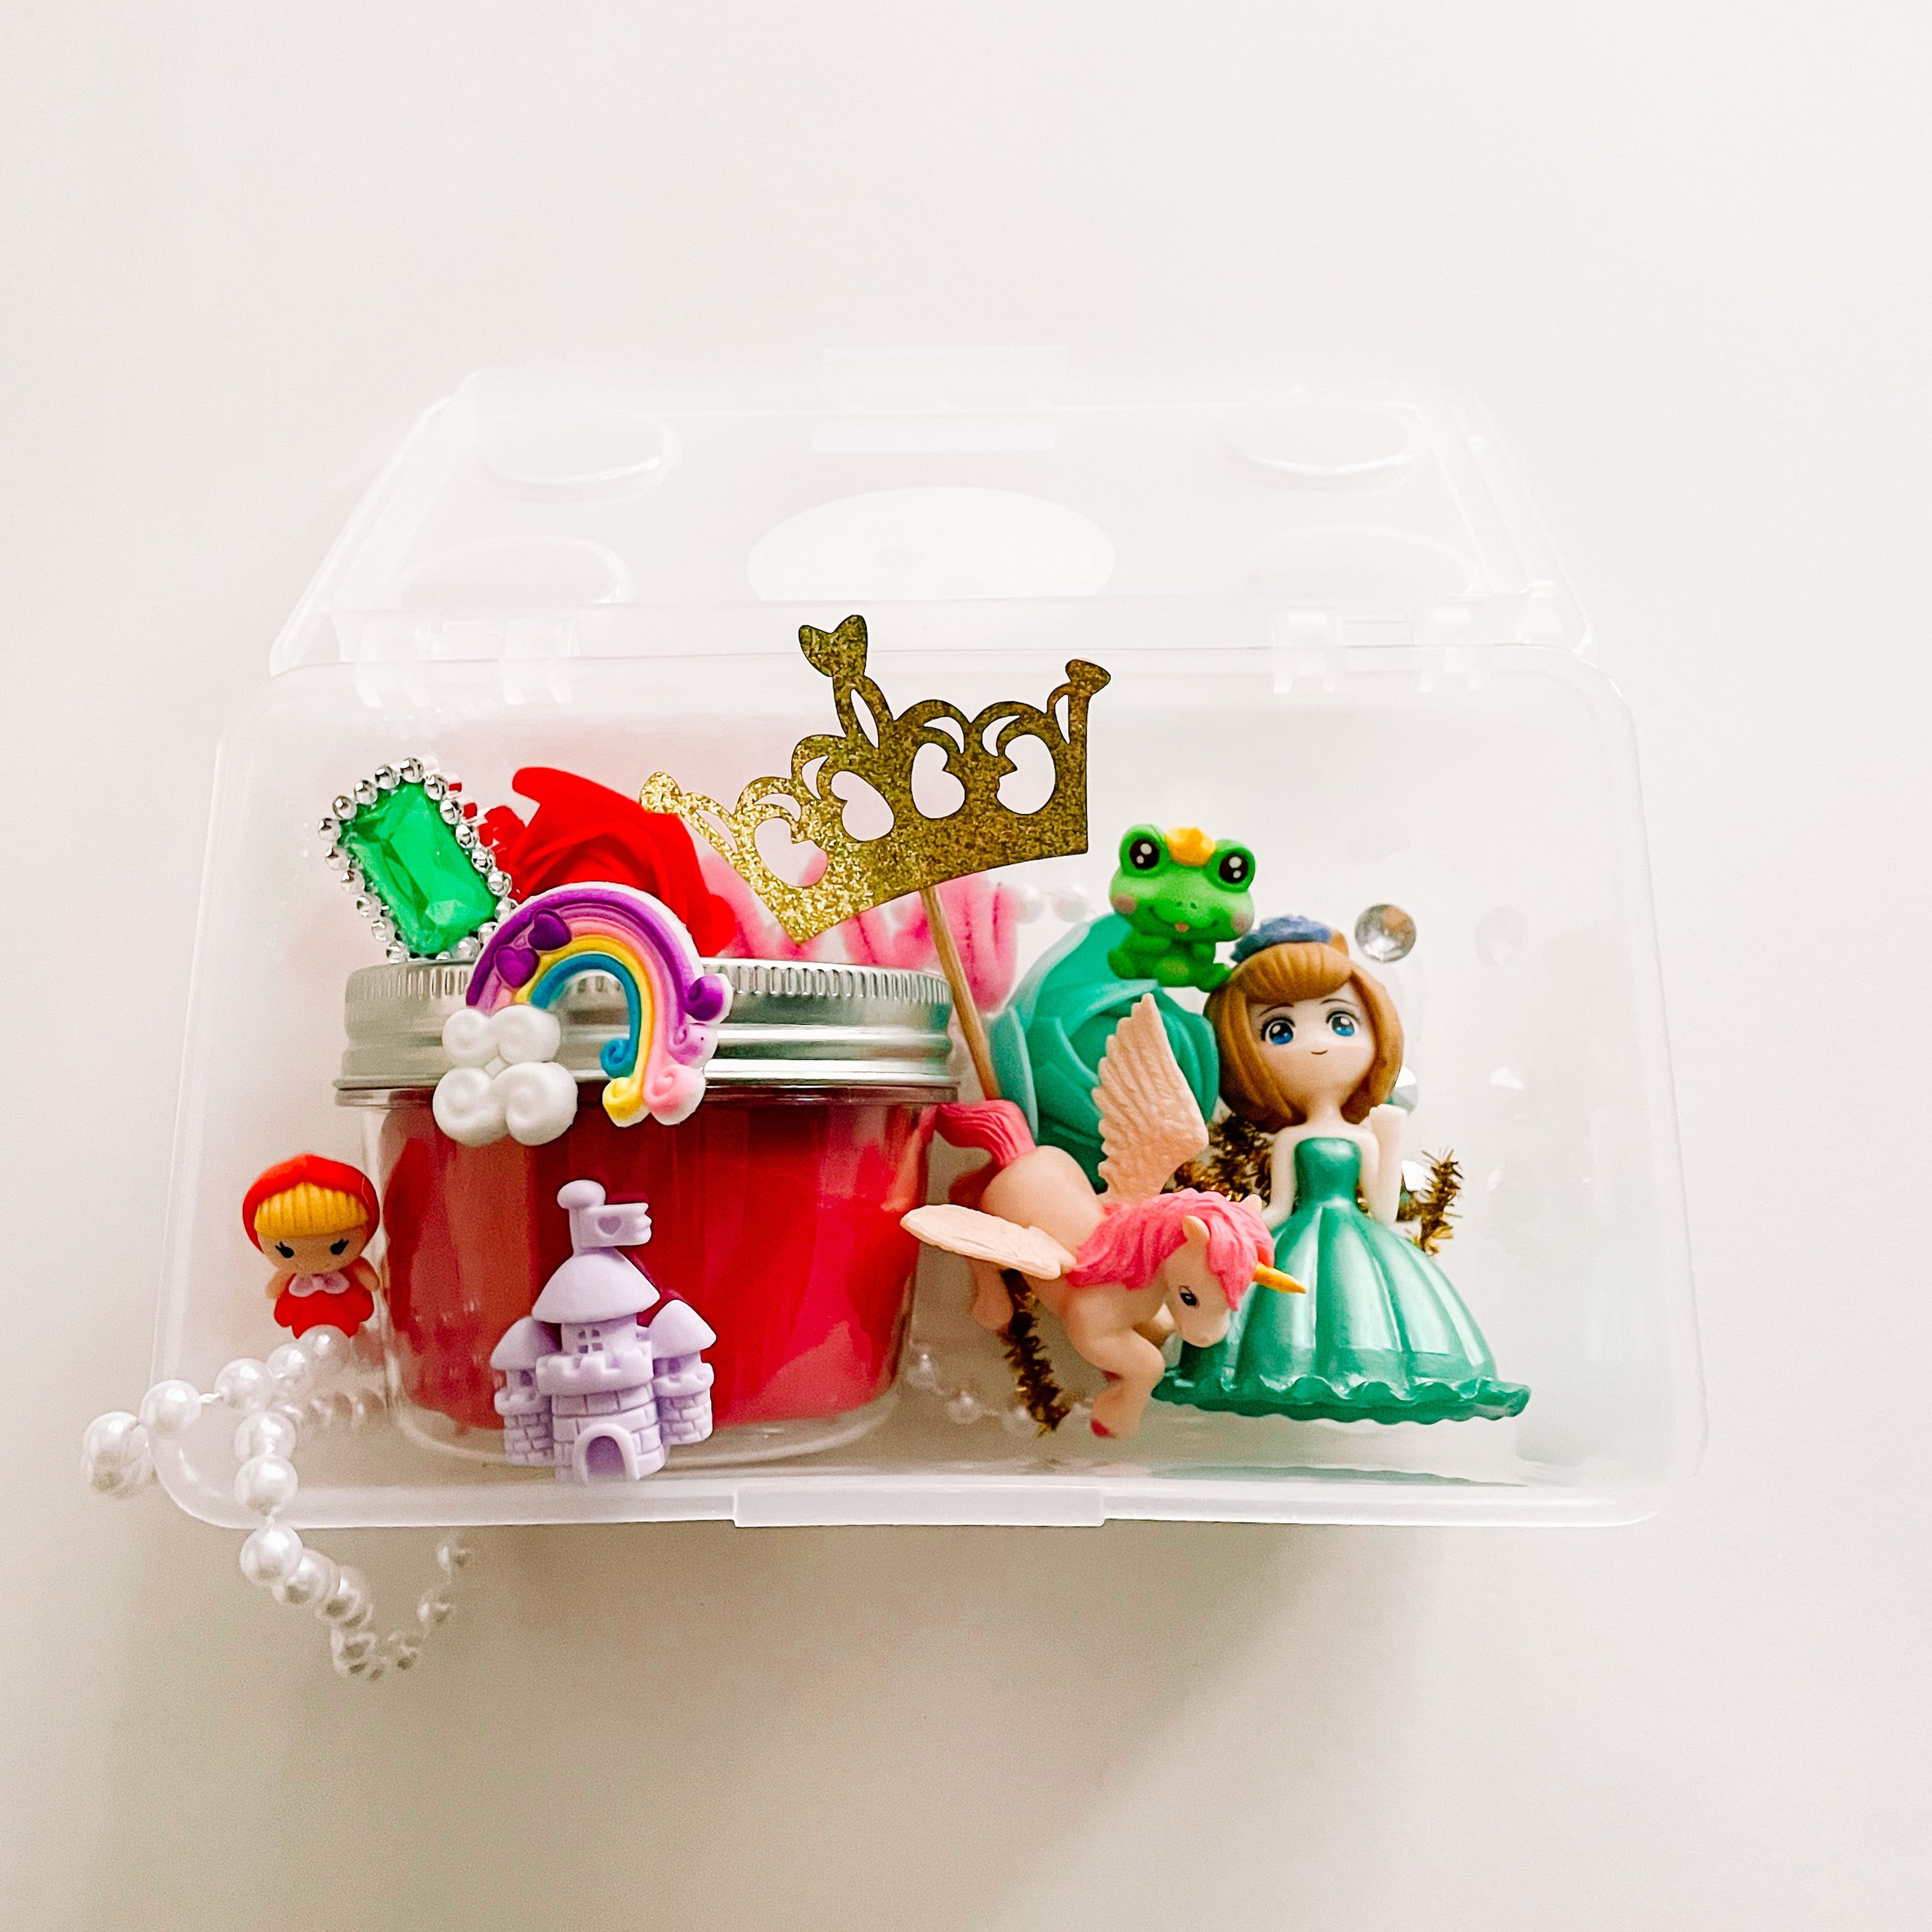 Pampered Princess Play Dough Kit - Small